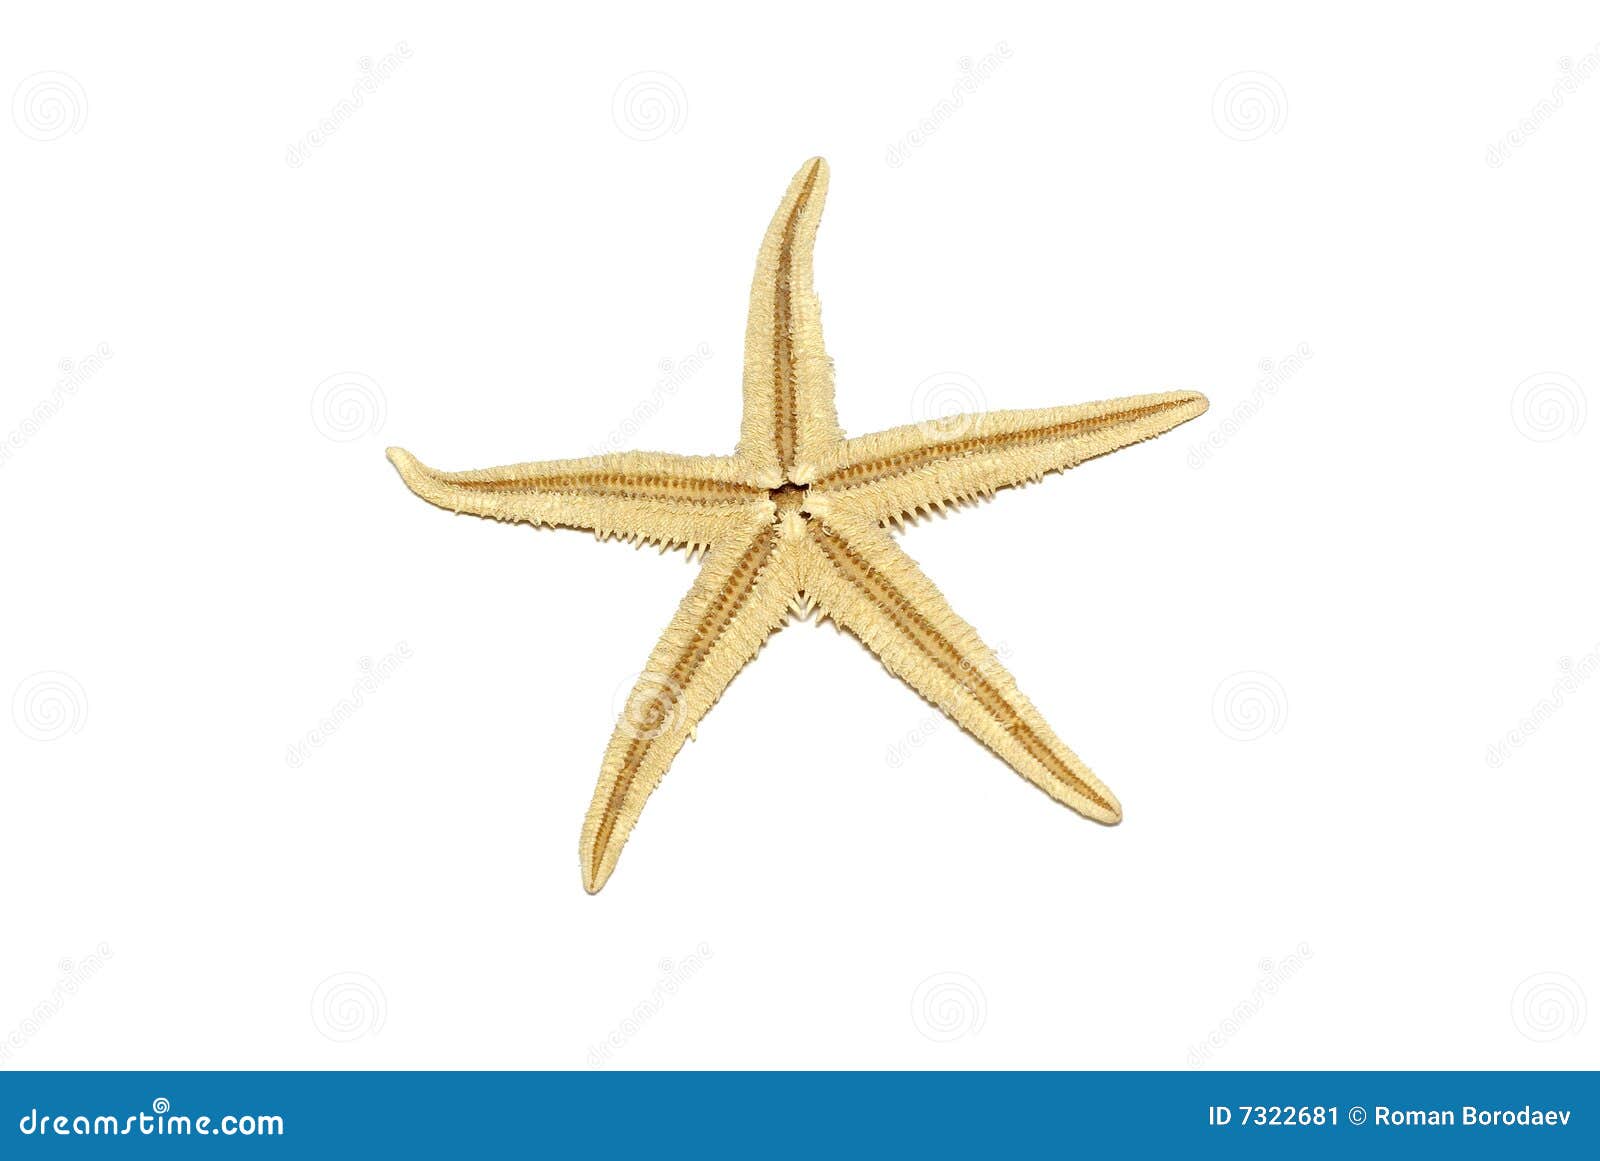 starfish  on white background seastar star sea fish shell coral ocean marine creature seashell asterias dry rubens five